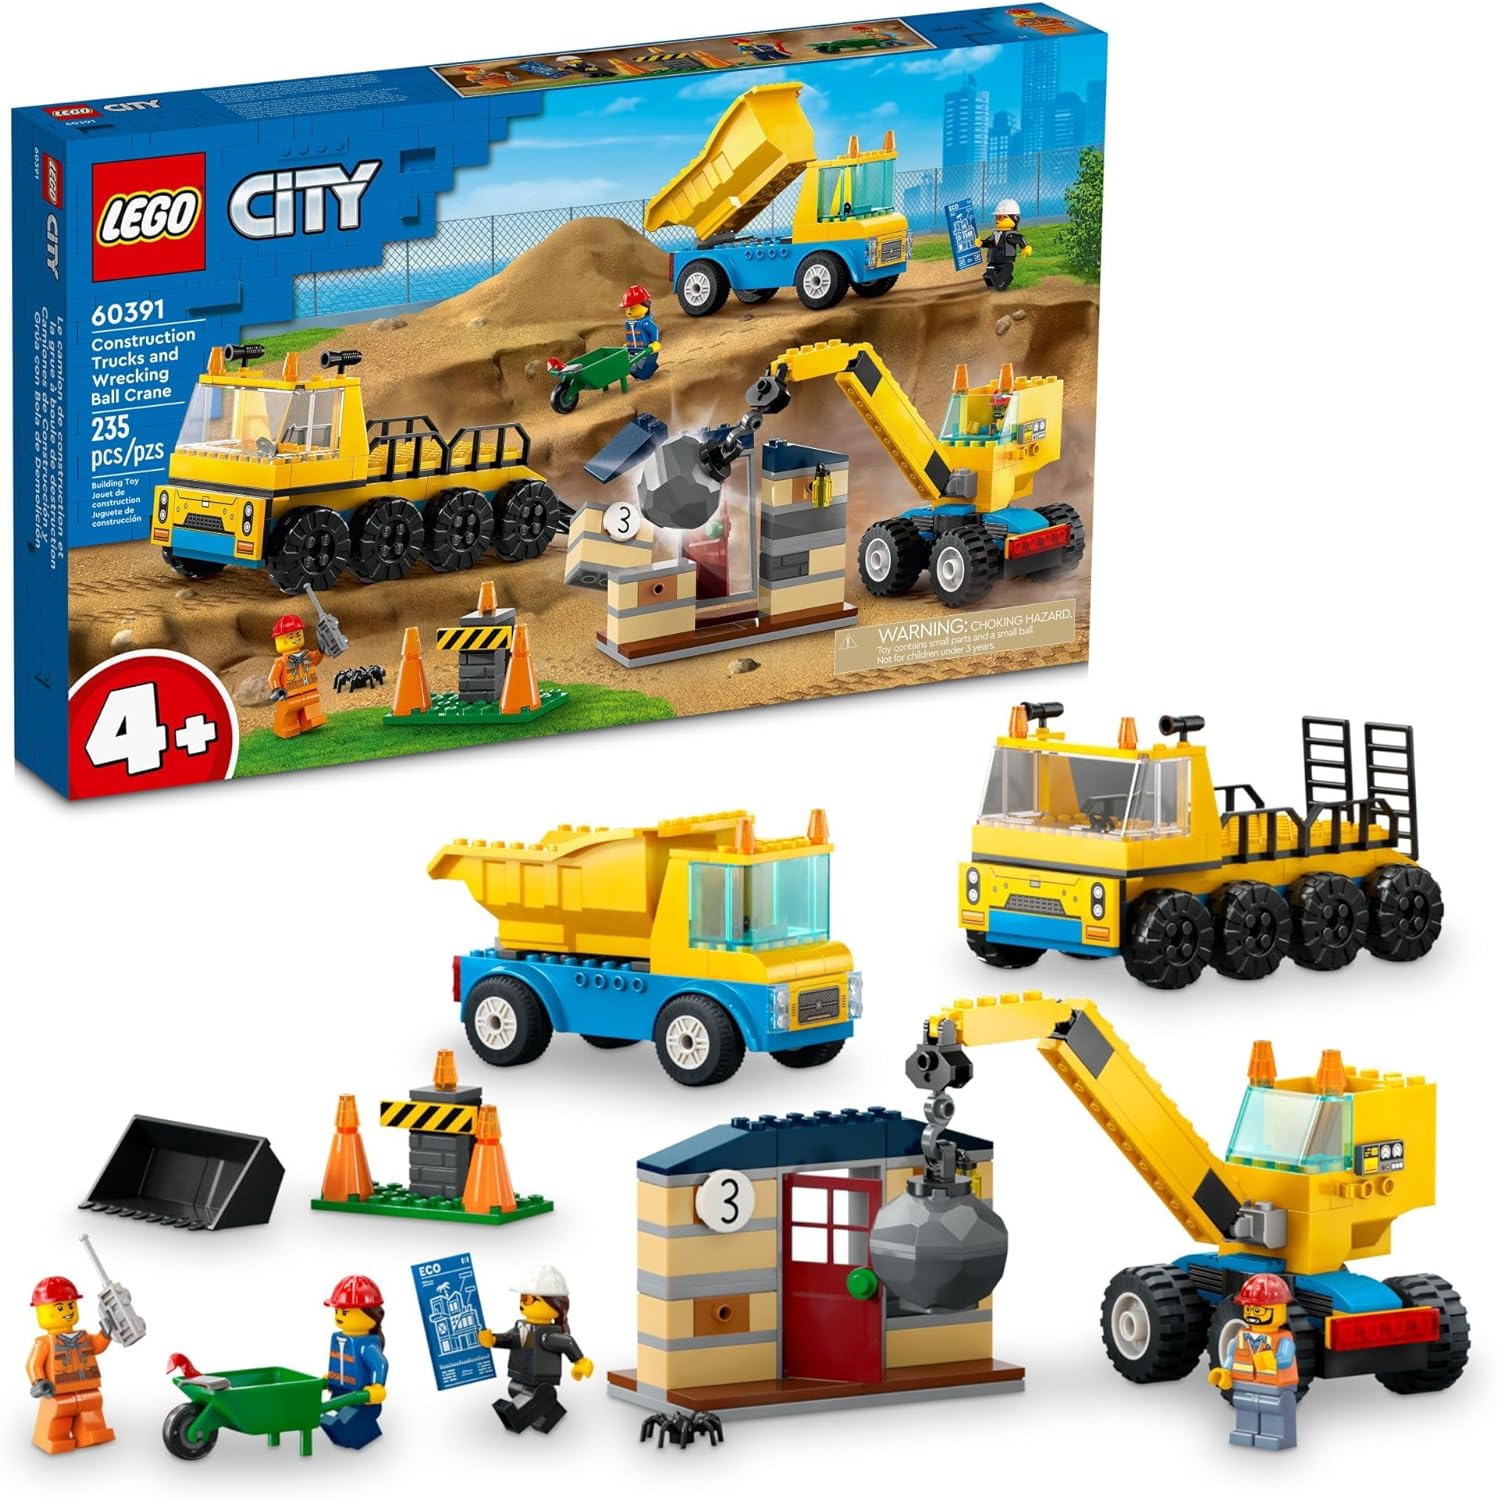 LEGO City Construction Trucks Review